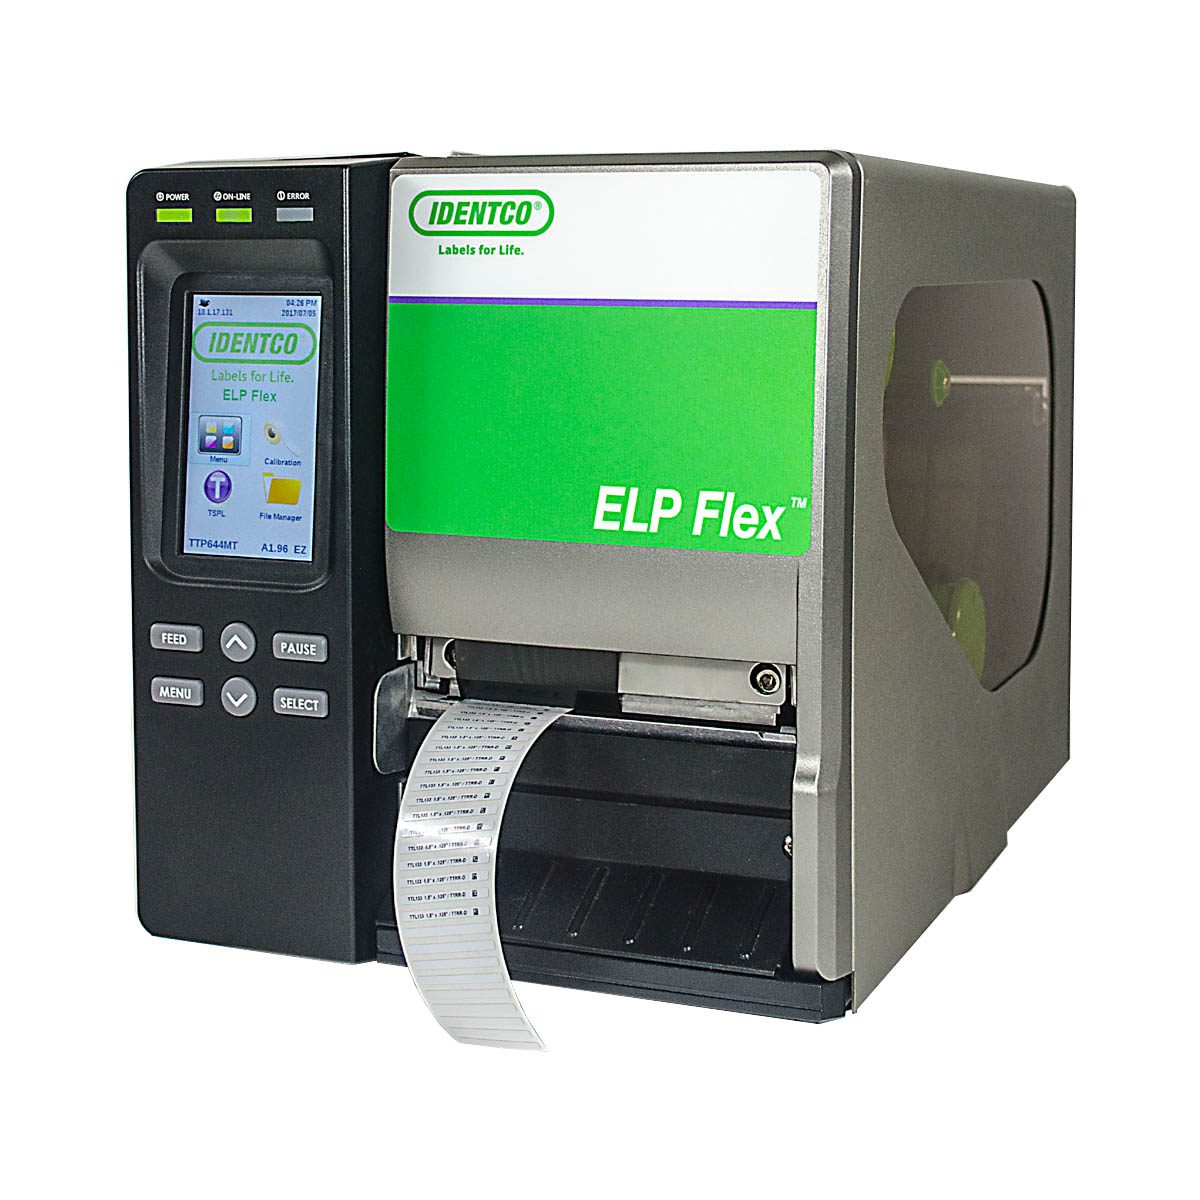 Idenco ELP Flex Printer